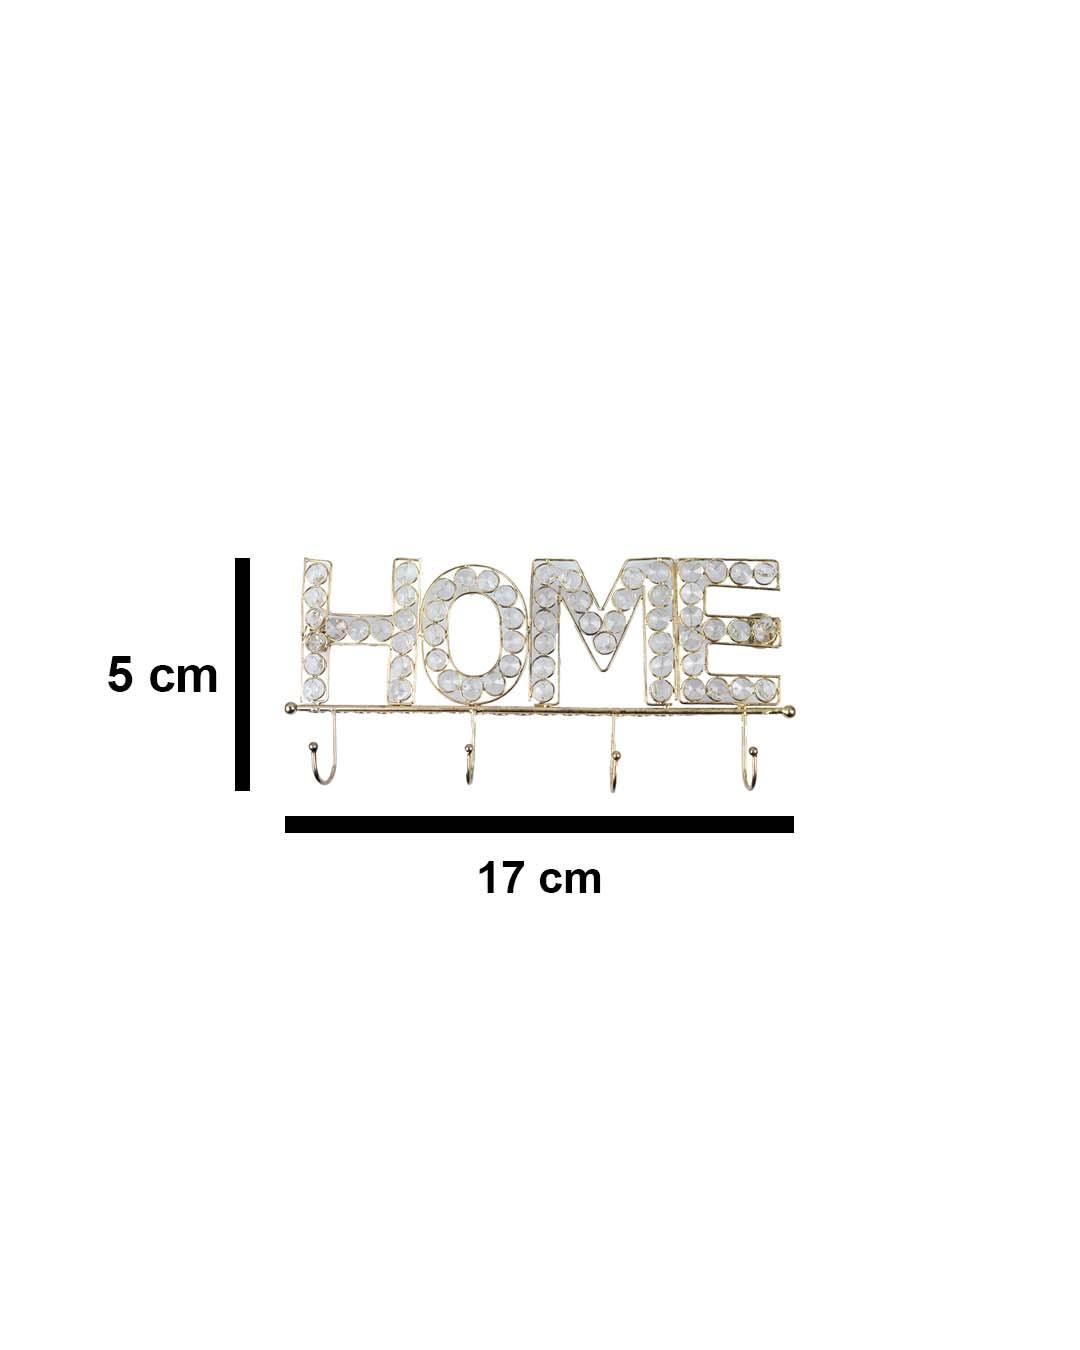 VON CASA "HOME Sign" Silver Crystal Wall Mounted Décor Hook, 4 Hooks, Golden, Iron - VON CASA